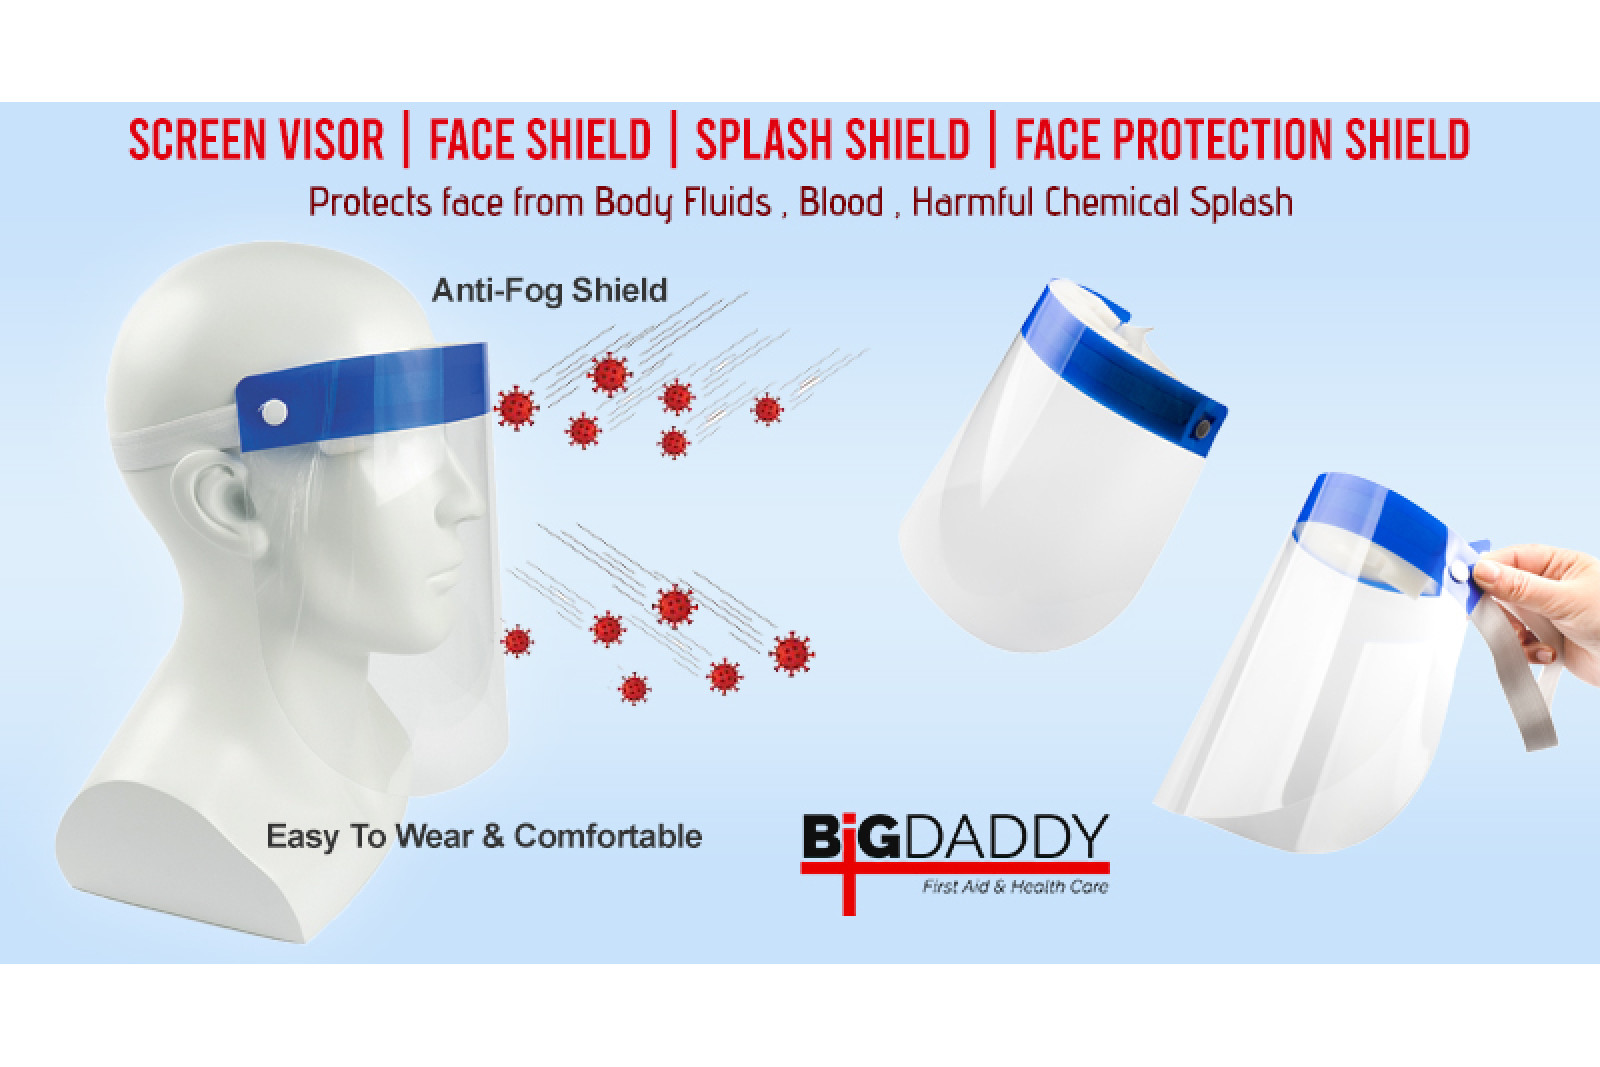 Screen Visor | Face Shield | Splash Shield | Face Protection Shield